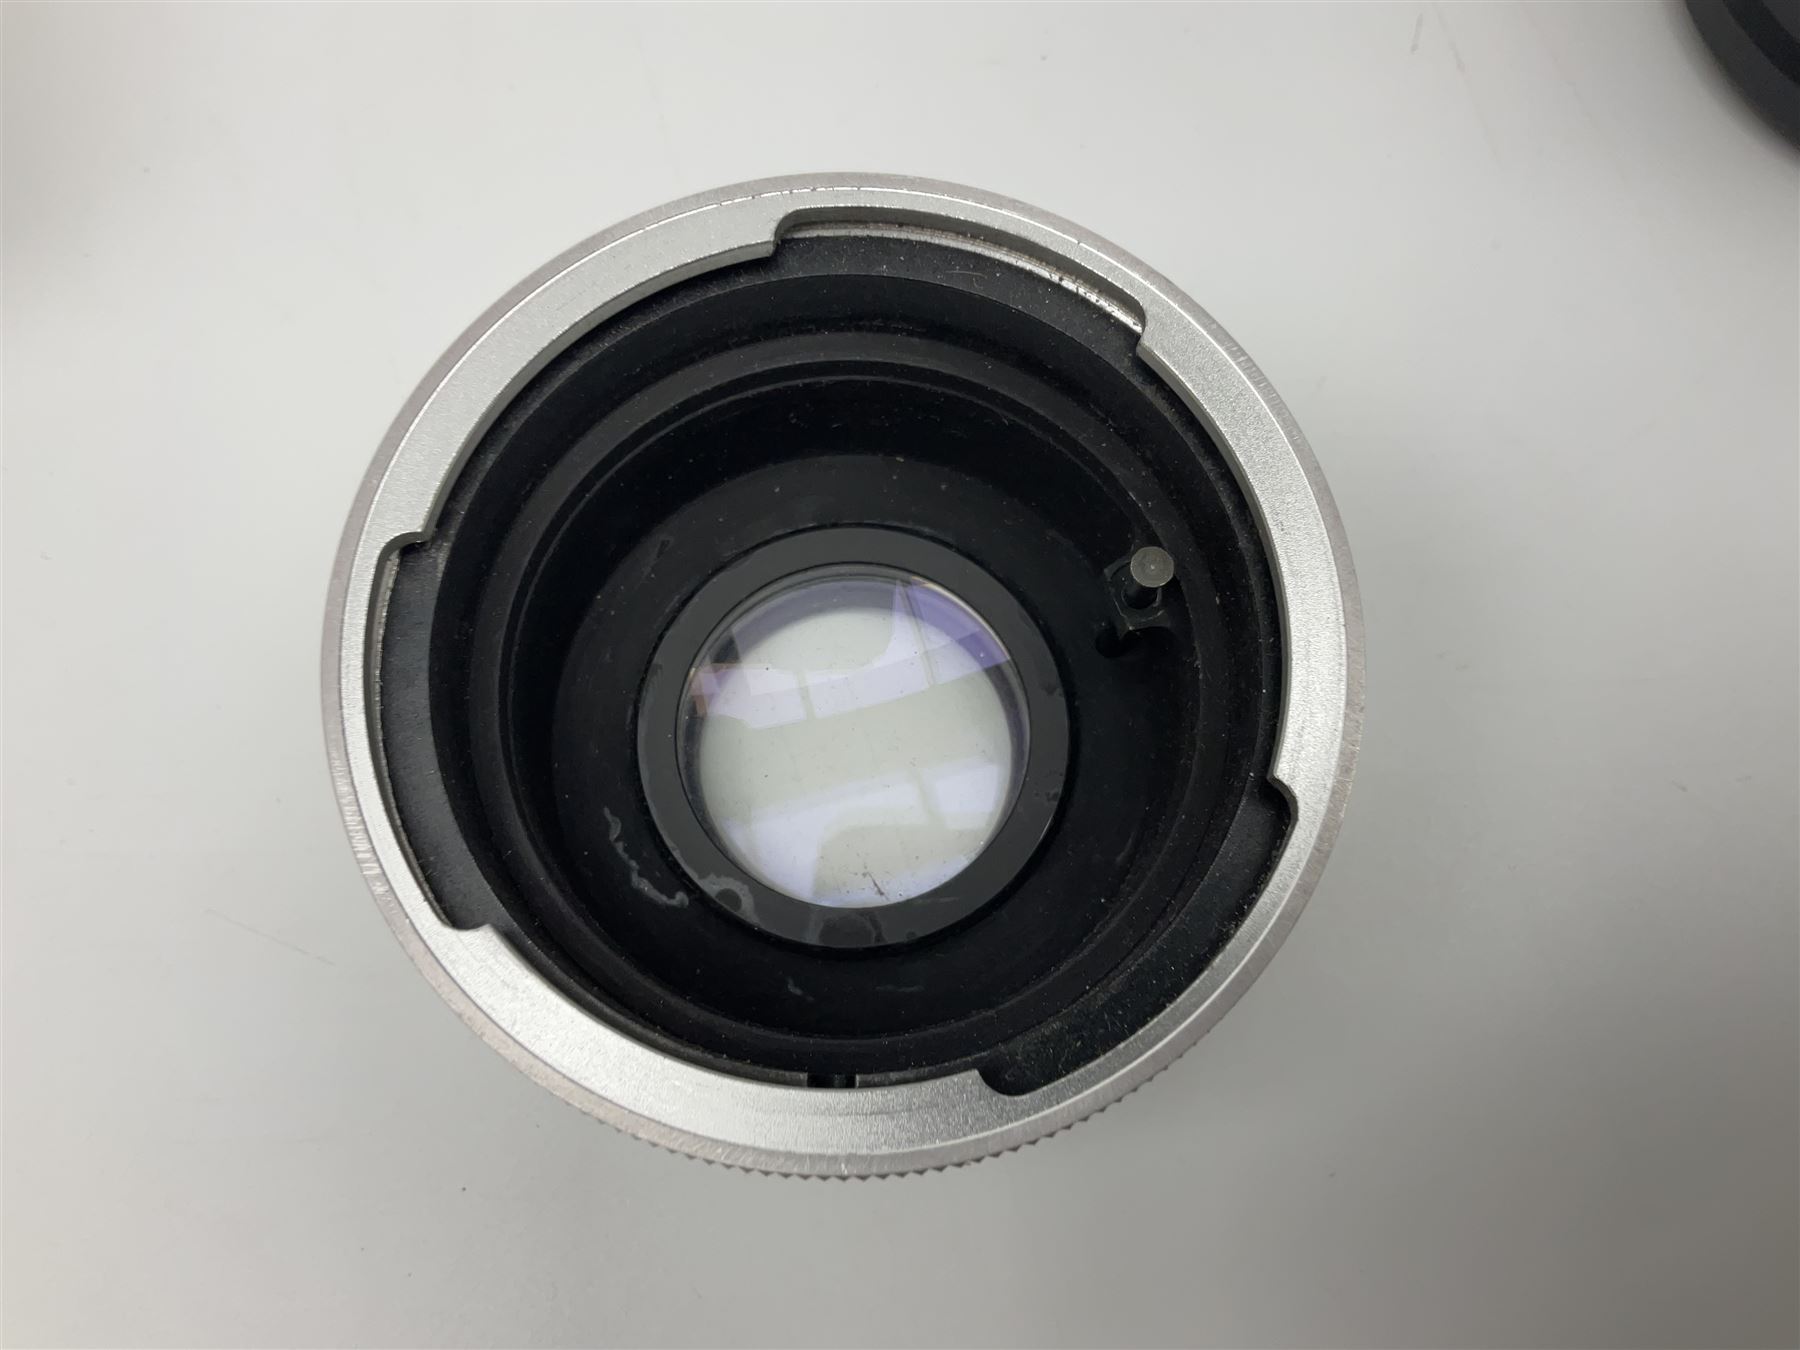 Pentacon '300mm f4.0 telephoto' lens serial no.8602124 - Image 14 of 19